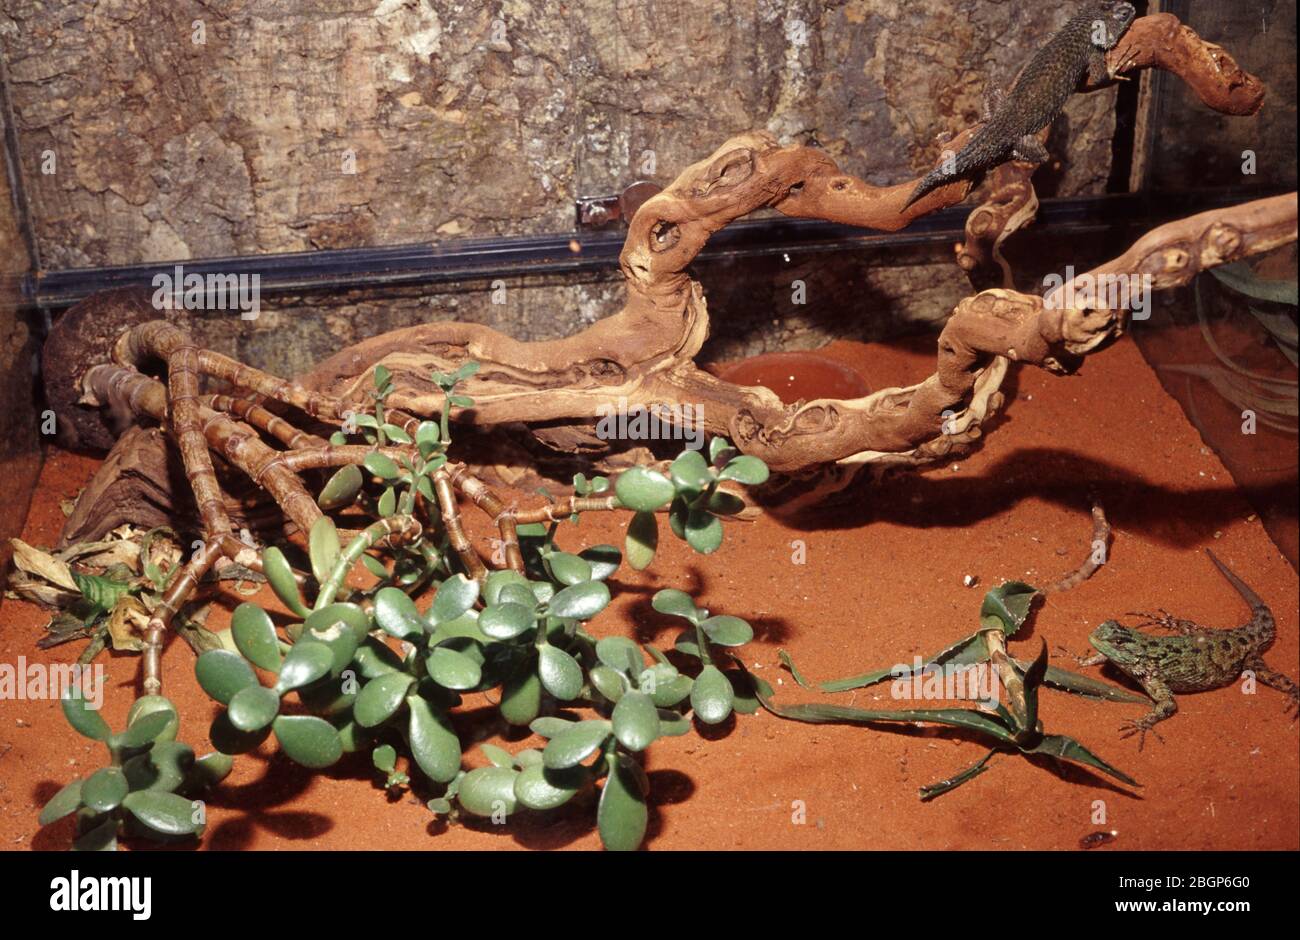 Desert terrarium for spiny lizard (Sceloporus sp.) Stock Photo